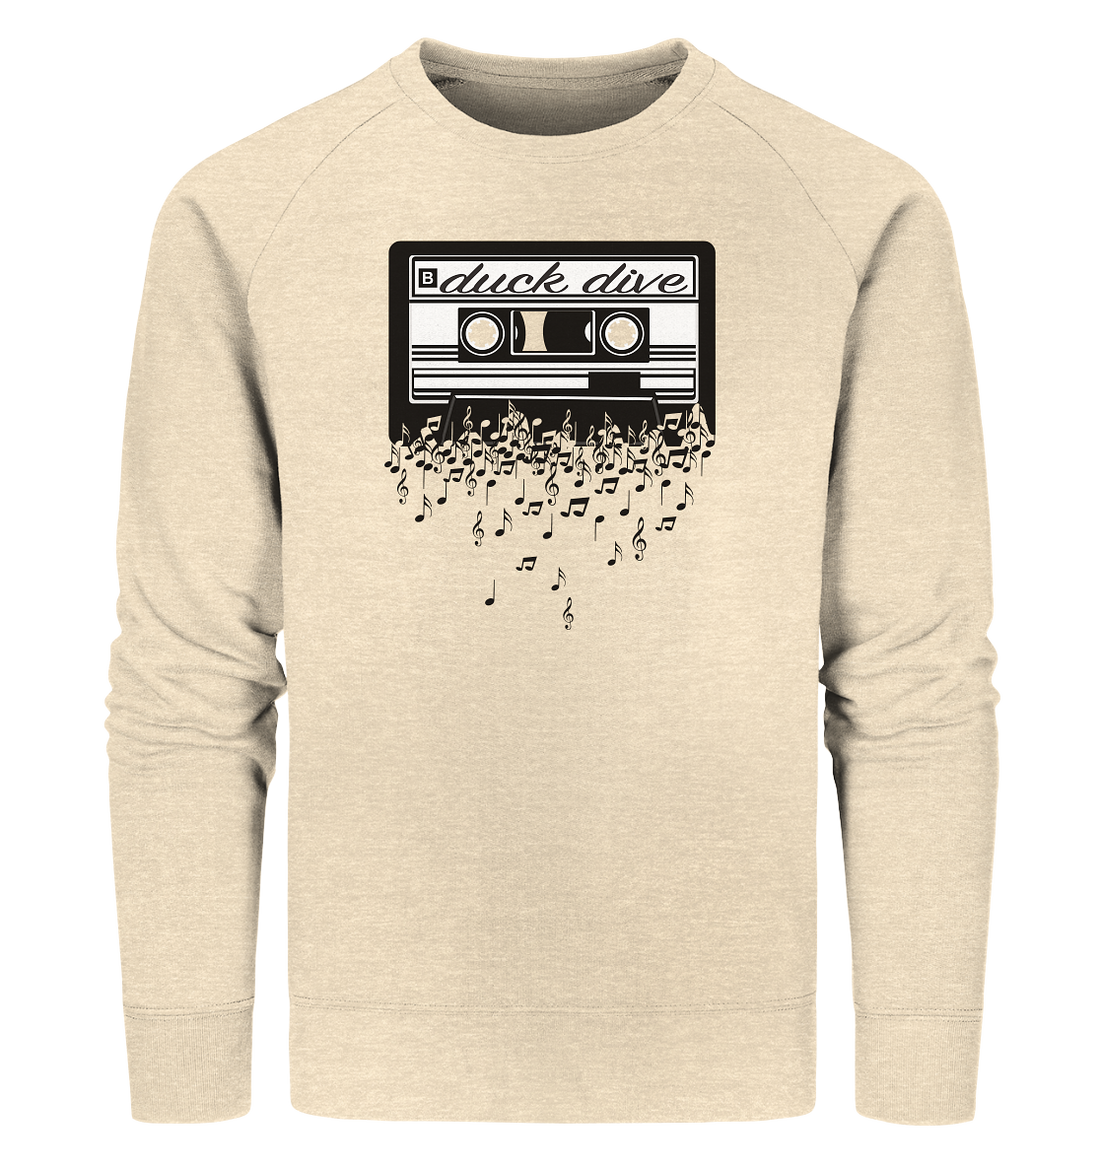 Cassette - Organic Sweatshirt - Duck Dive Clothing